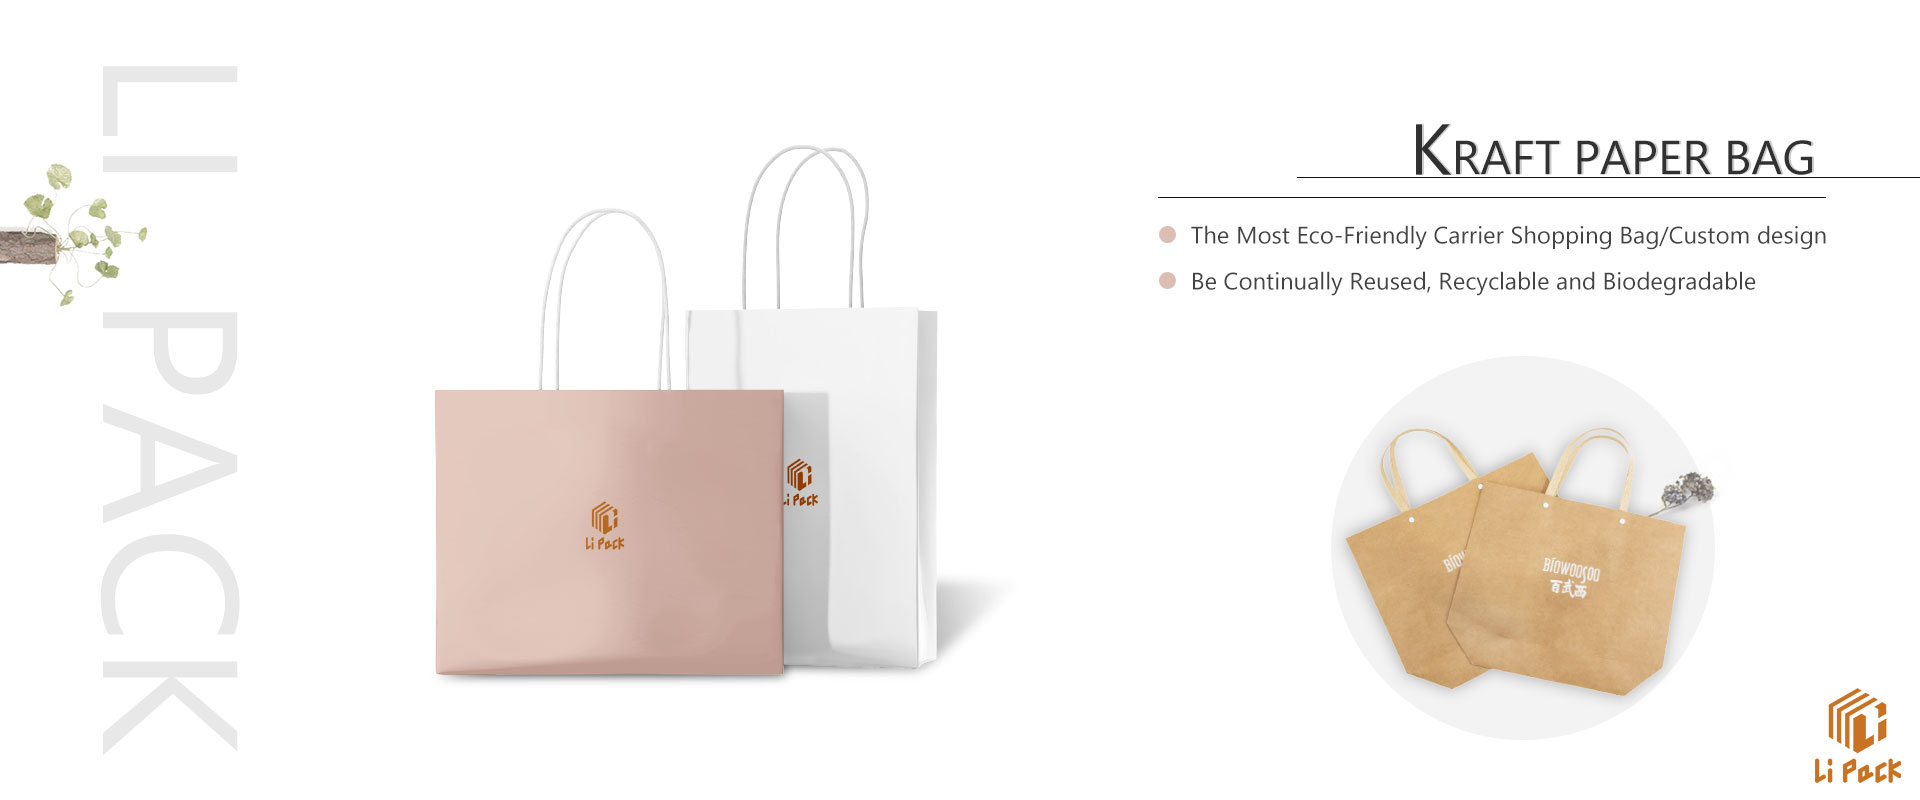 Special Design Art Paper Shopping Bag